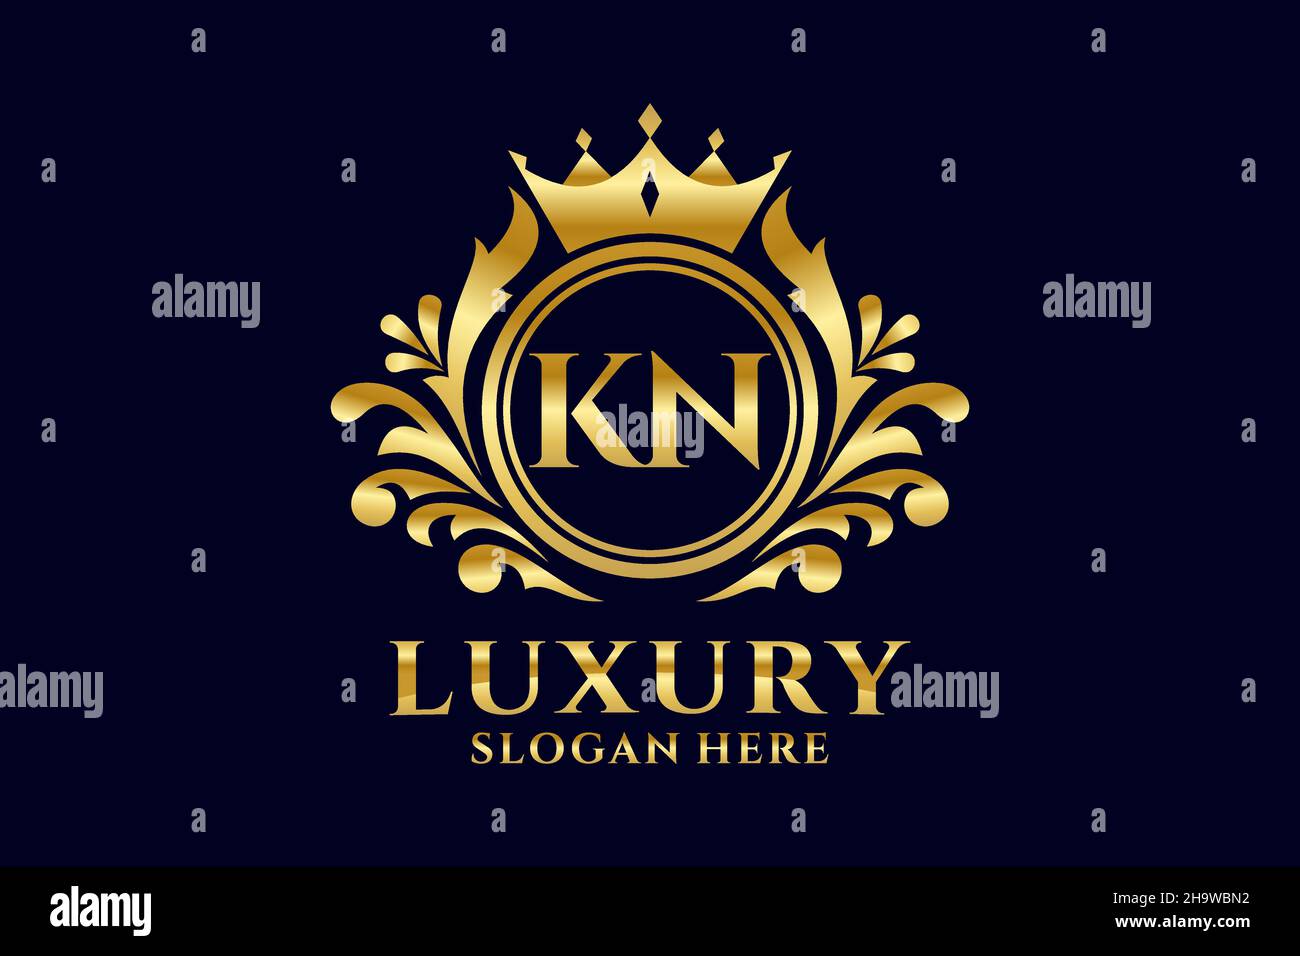 KN Letter Royal Luxury Logo Vorlage in Vektorgrafik für luxuriöse Branding-Projekte und andere Vektorgrafik. Stock Vektor